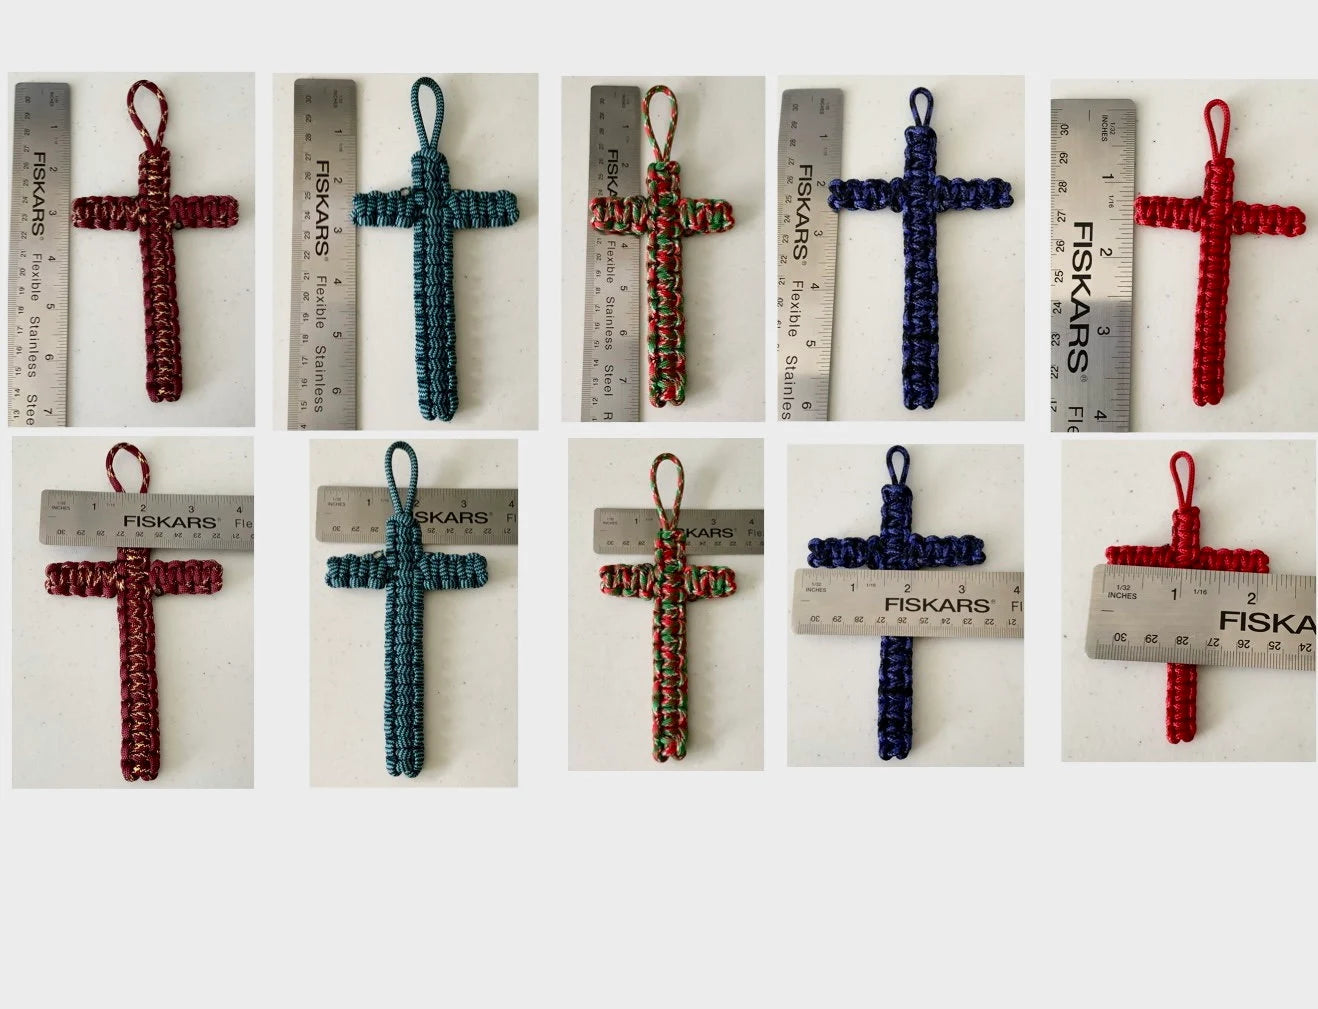 Beautiful Crosses Made of Macrame Paracord - Christian, Faith, Calvary Cross - Keychains, Zipper Pulls, Bookmarks, Ornaments, Car Charms